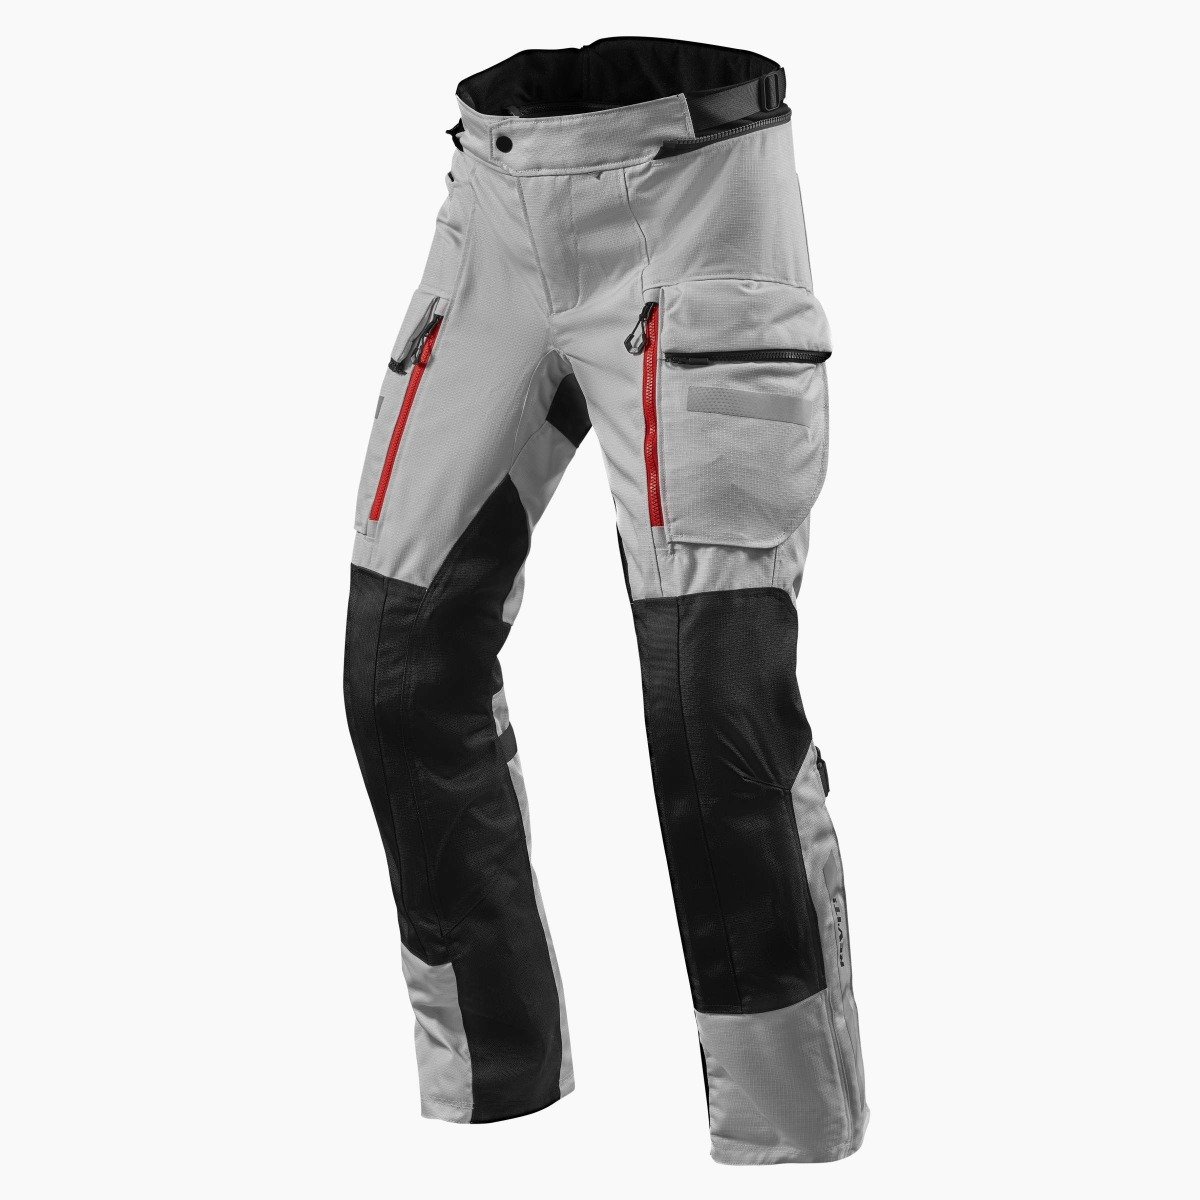 Image of REV'IT! Sand 4 H2O Short Silver Black Motorcycle Pants Size S EN